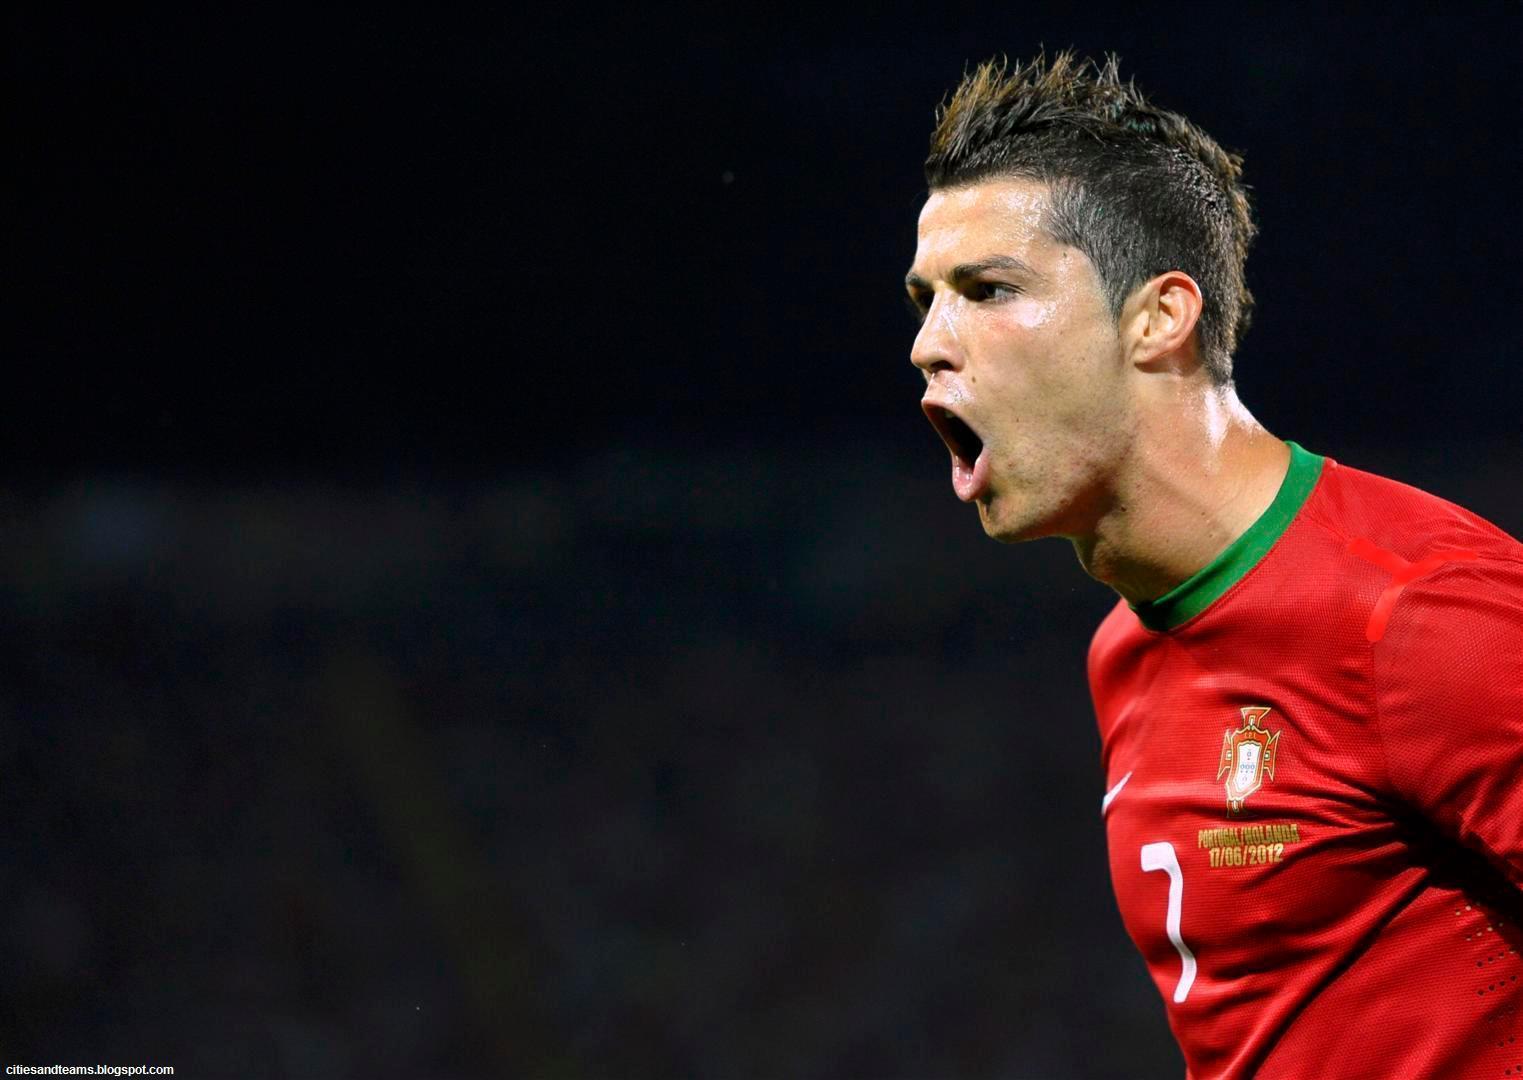 Download free Cristiano Ronaldo Wallpapers in HD